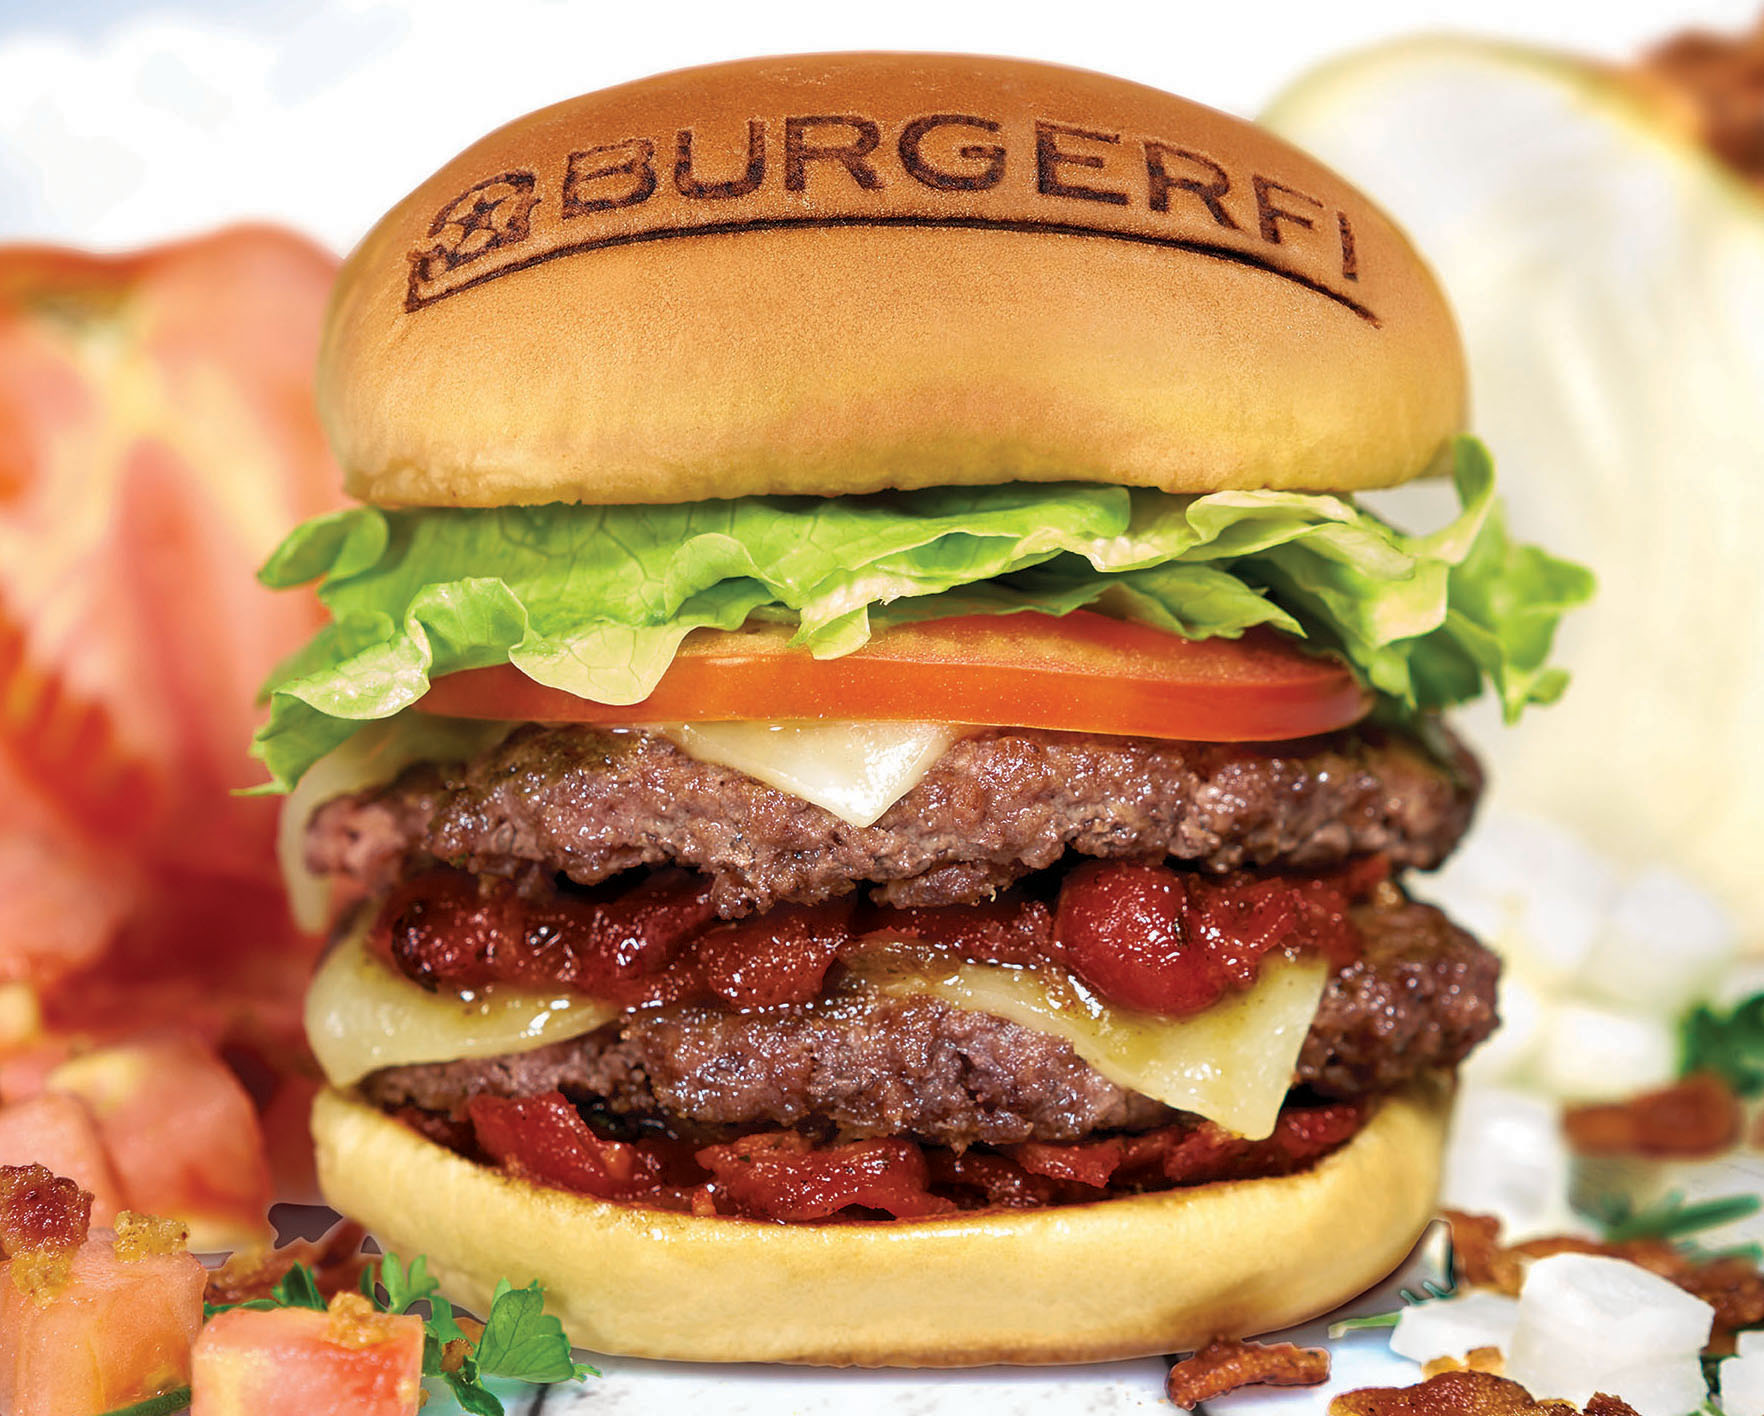 BurgerFi burger